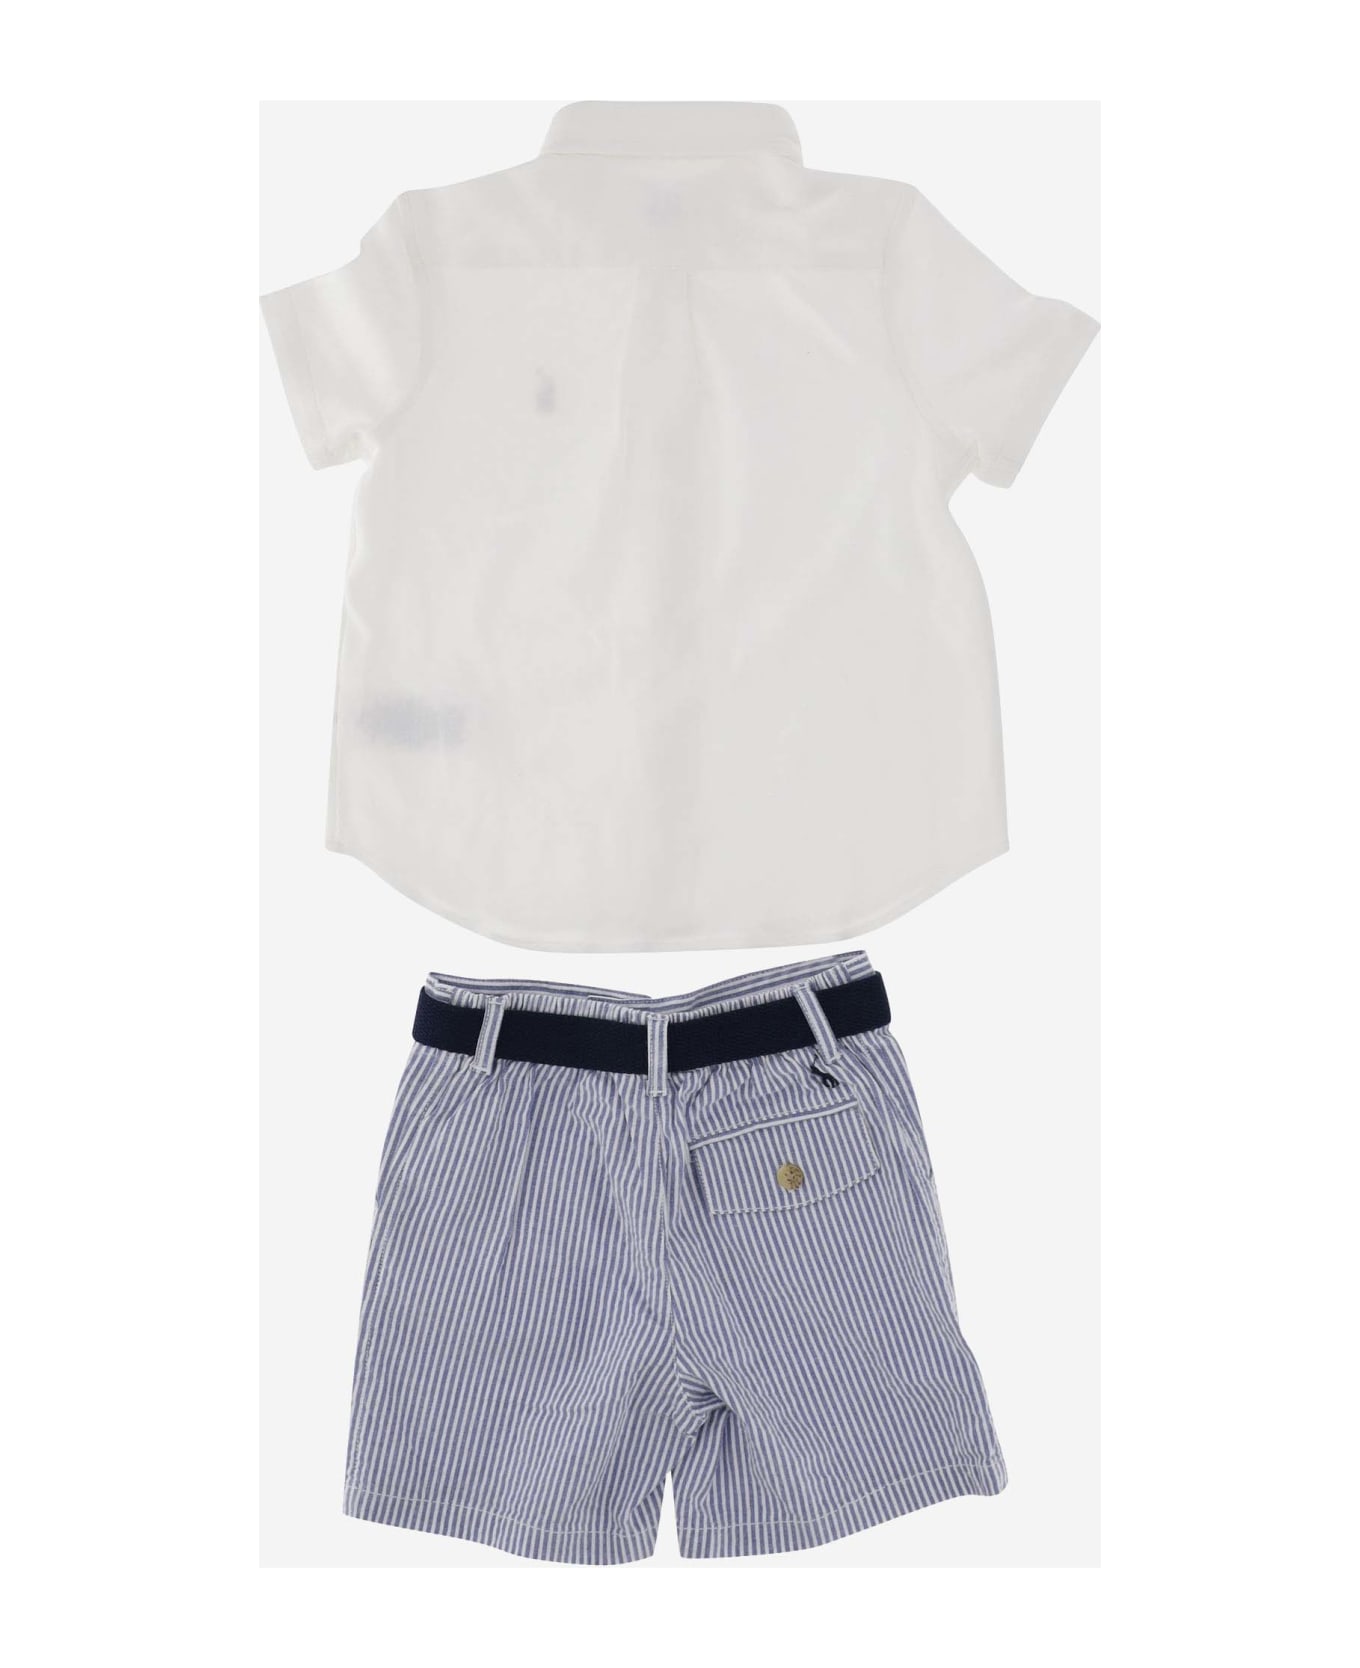 Ralph Lauren Two-piece Outfit Set - White 水着